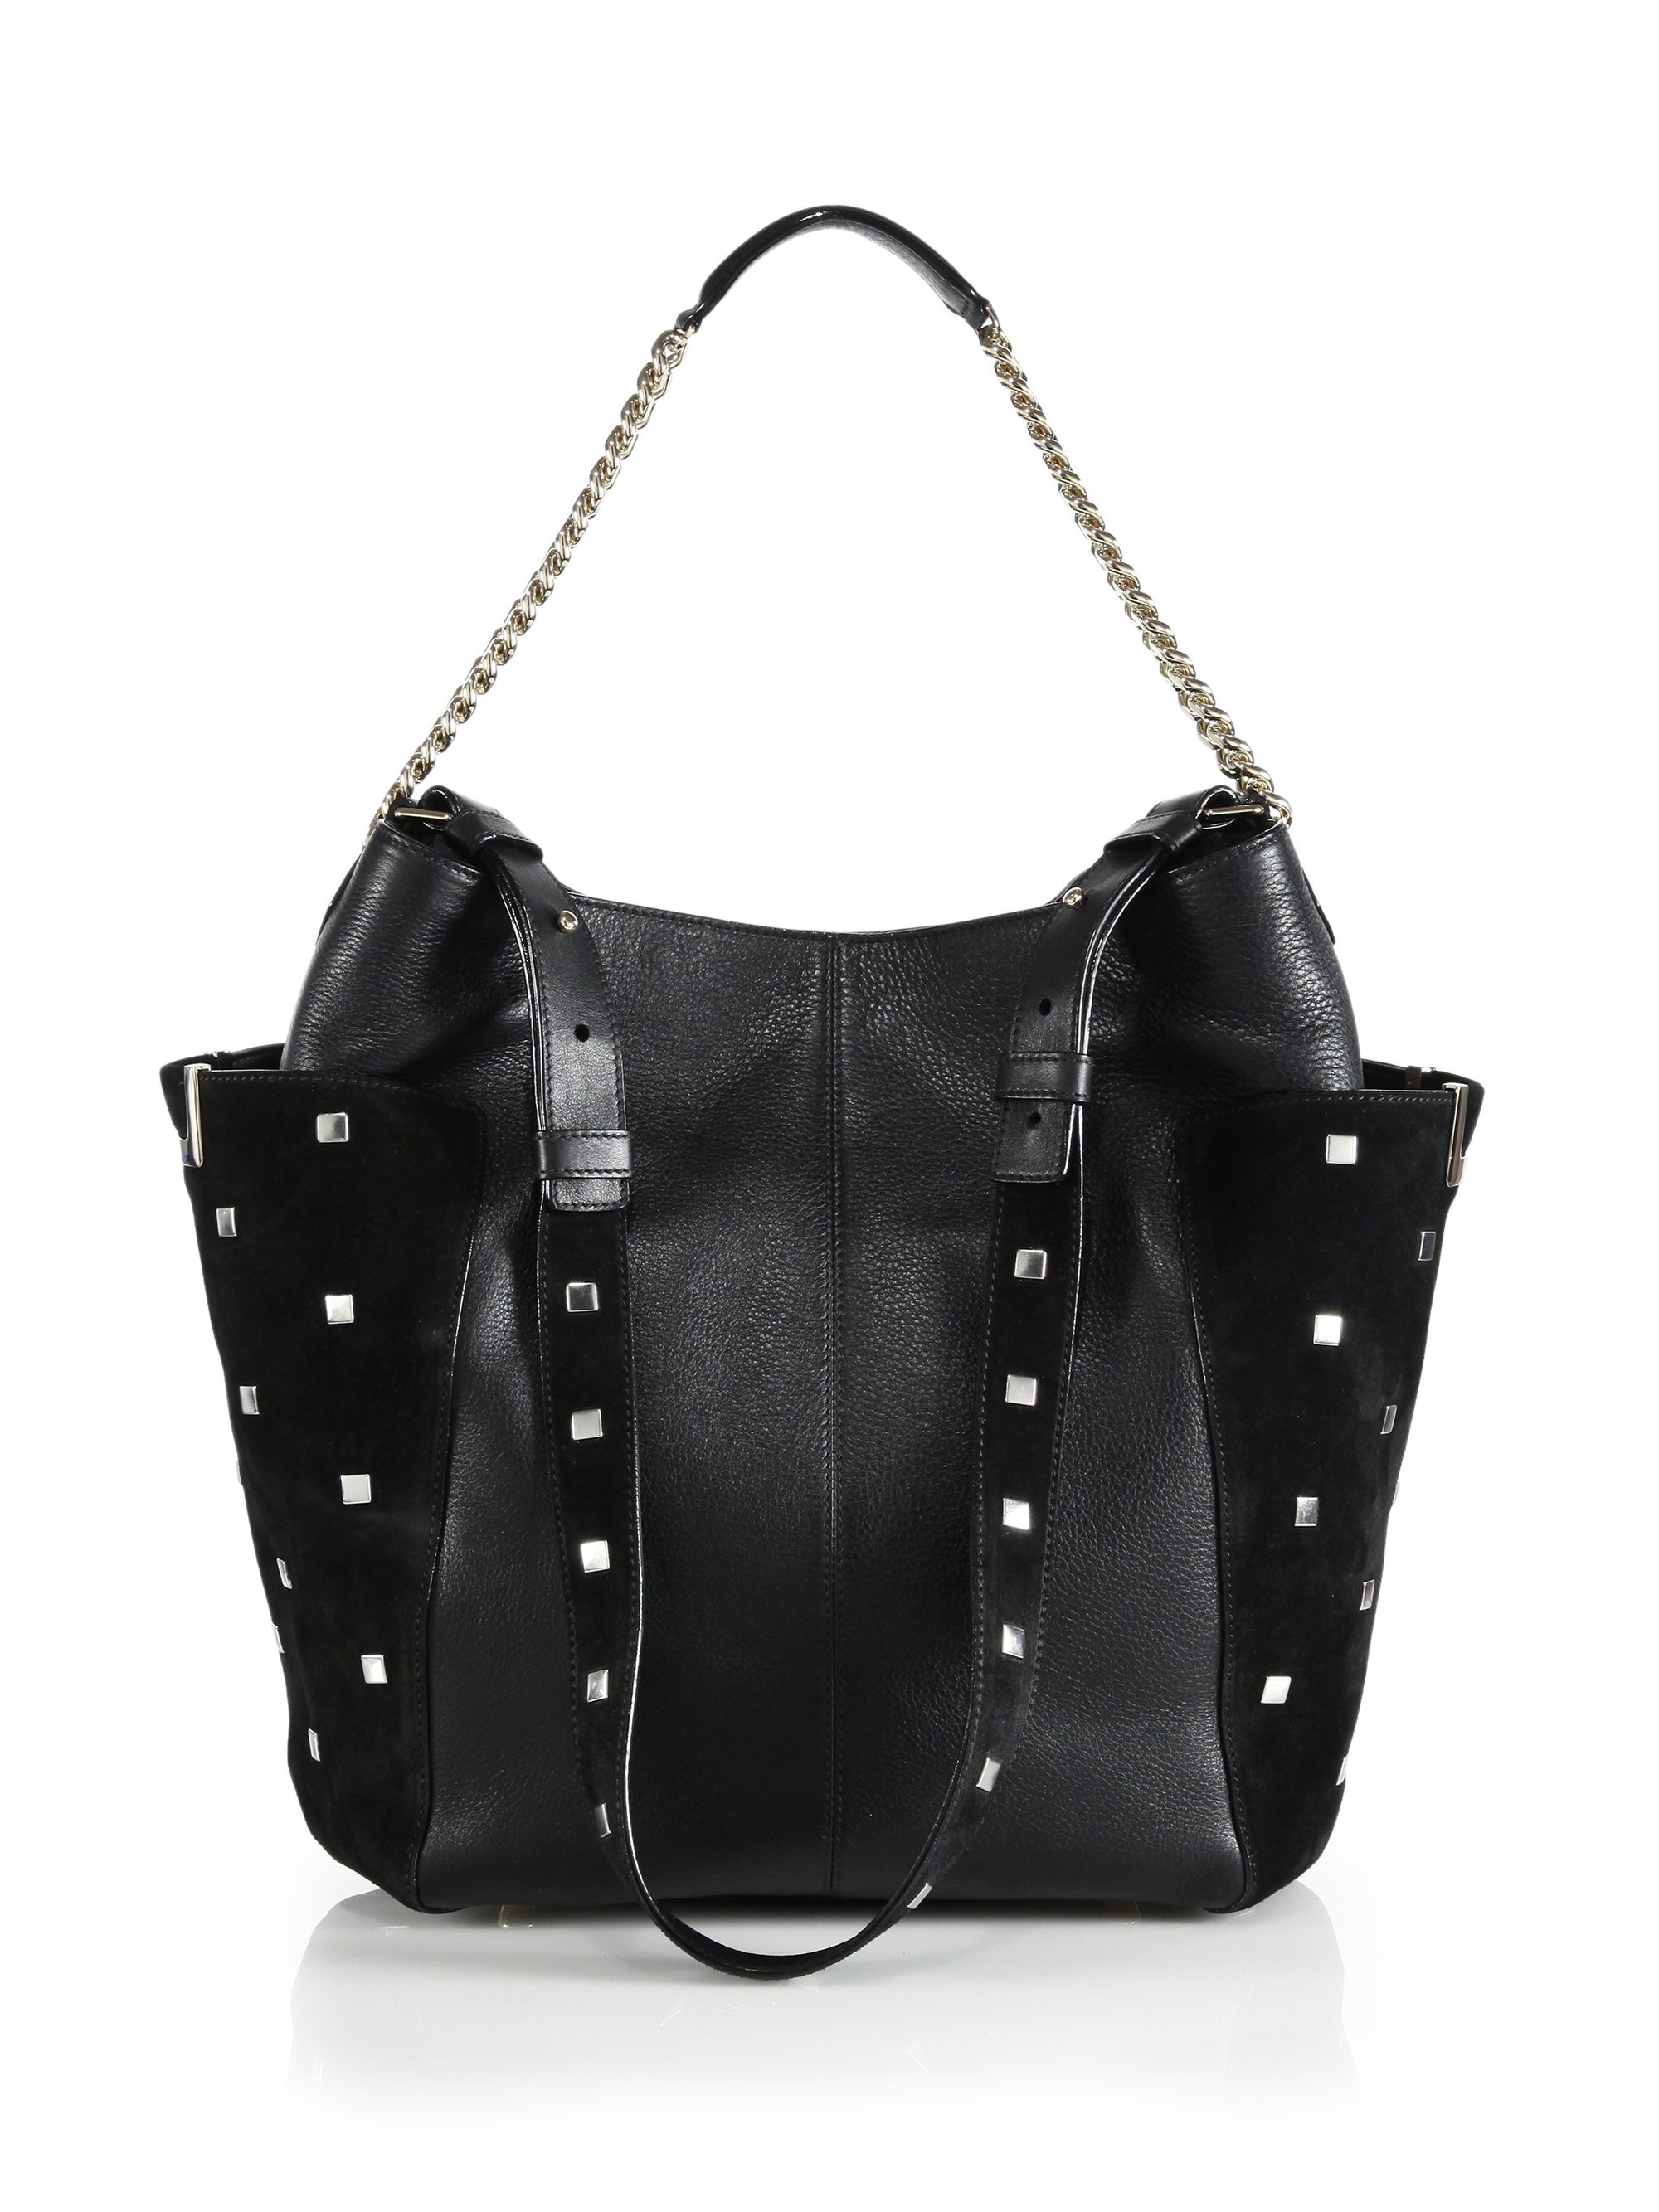 Lyst - Jimmy Choo Anna Studded Leather & Suede Shoulder Bag in Black